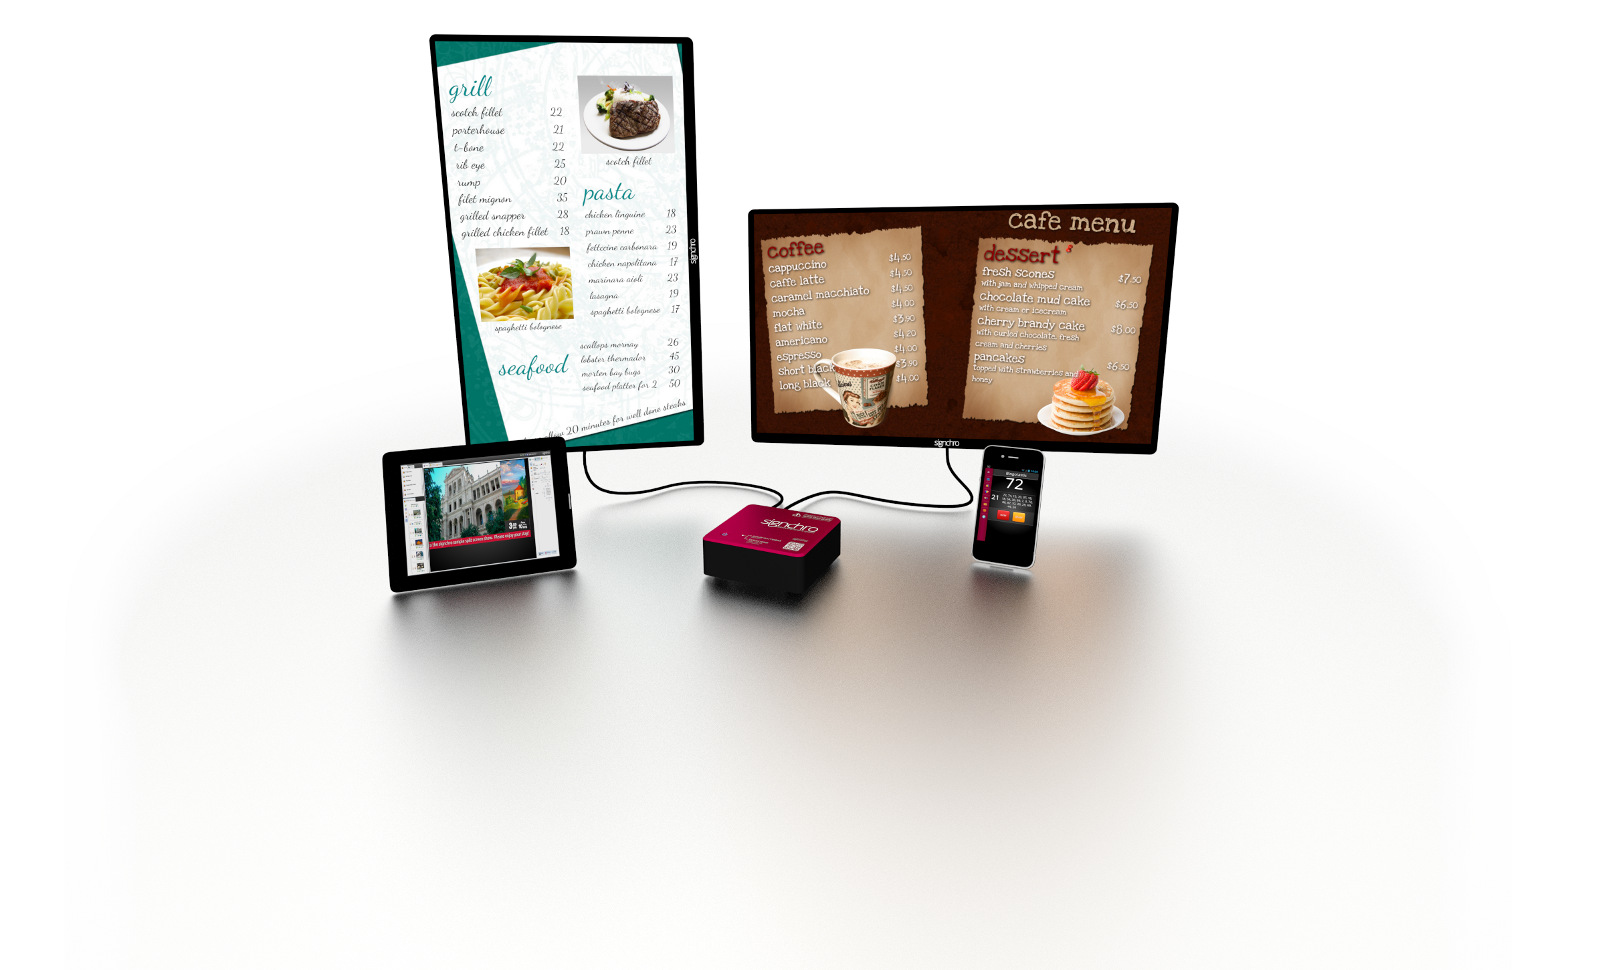 Signchro Media Player dual display typical setup